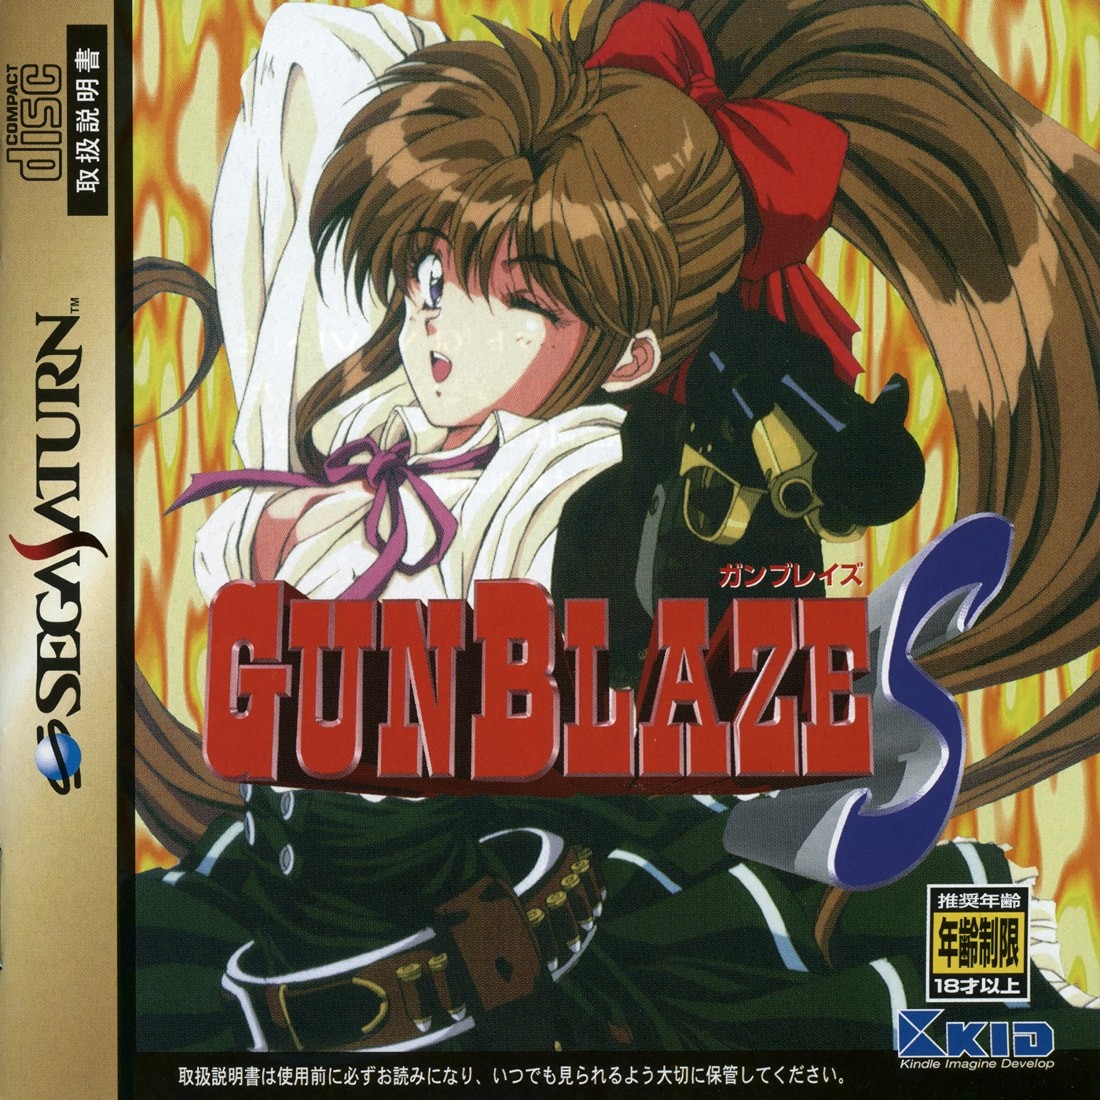 Capa do jogo Gunblaze S